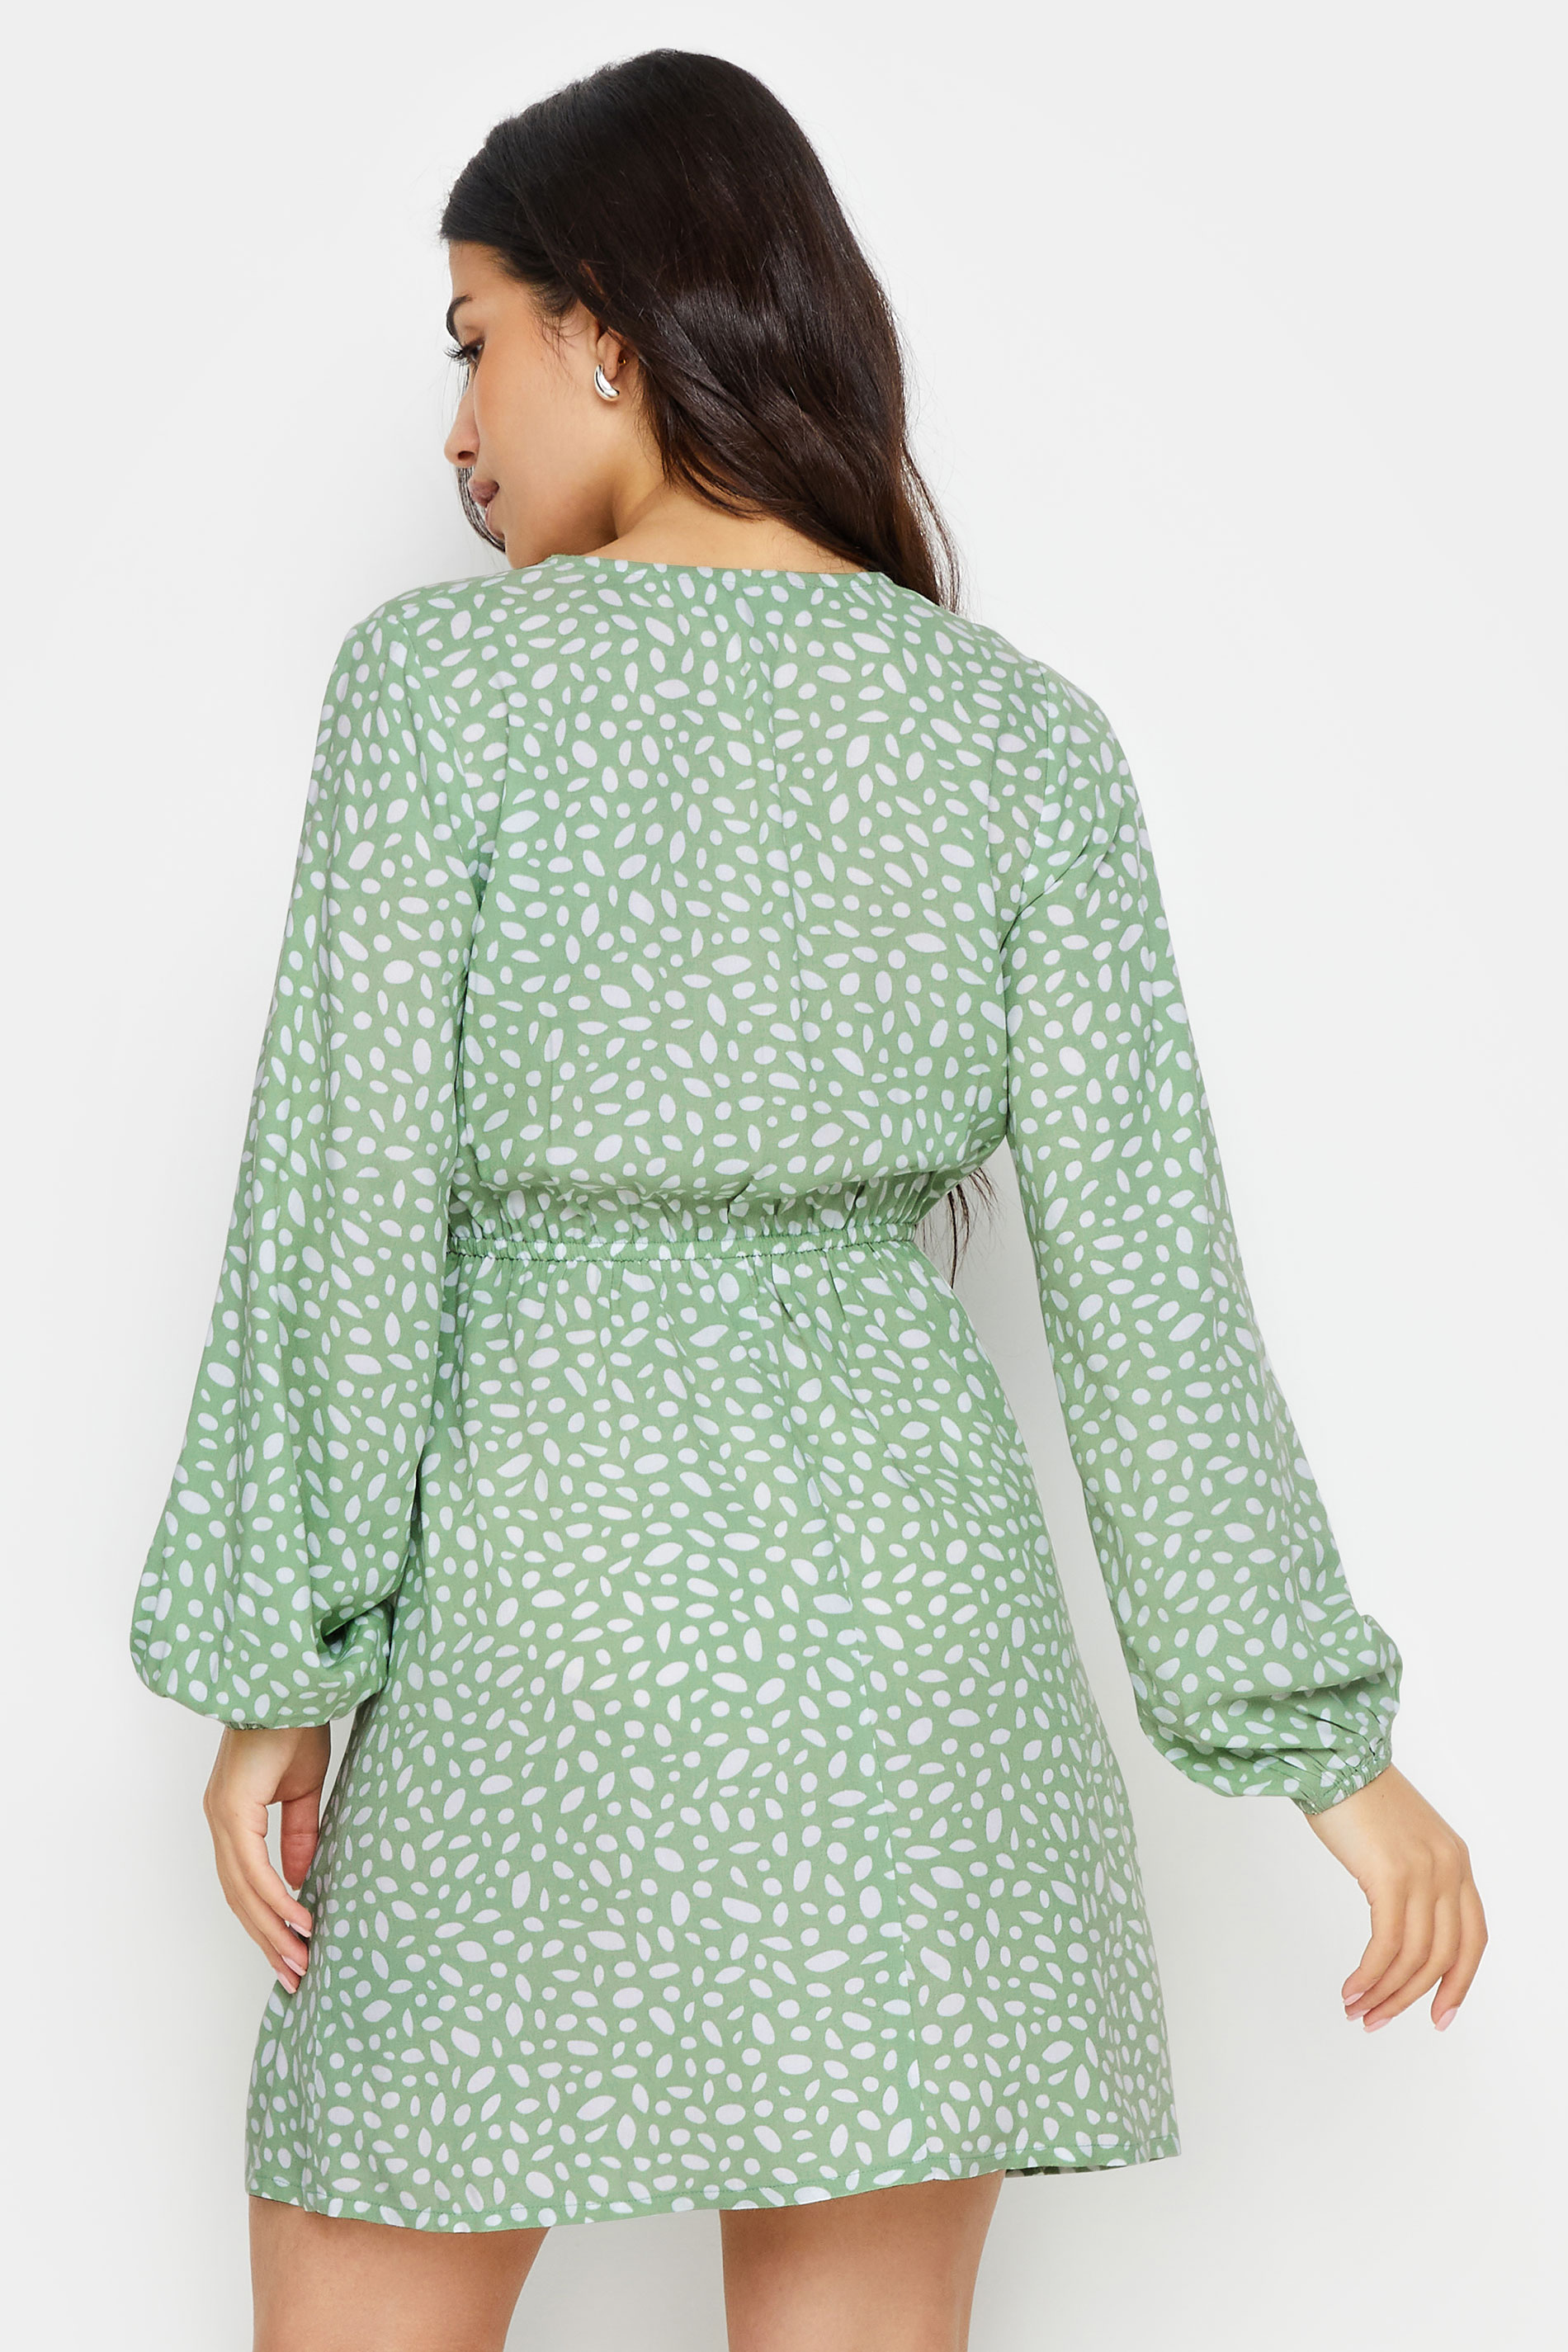 PixieGirl Petite Women's Sage Green Abstract Spot Print Mini Wrap Dress | PixieGirl 3